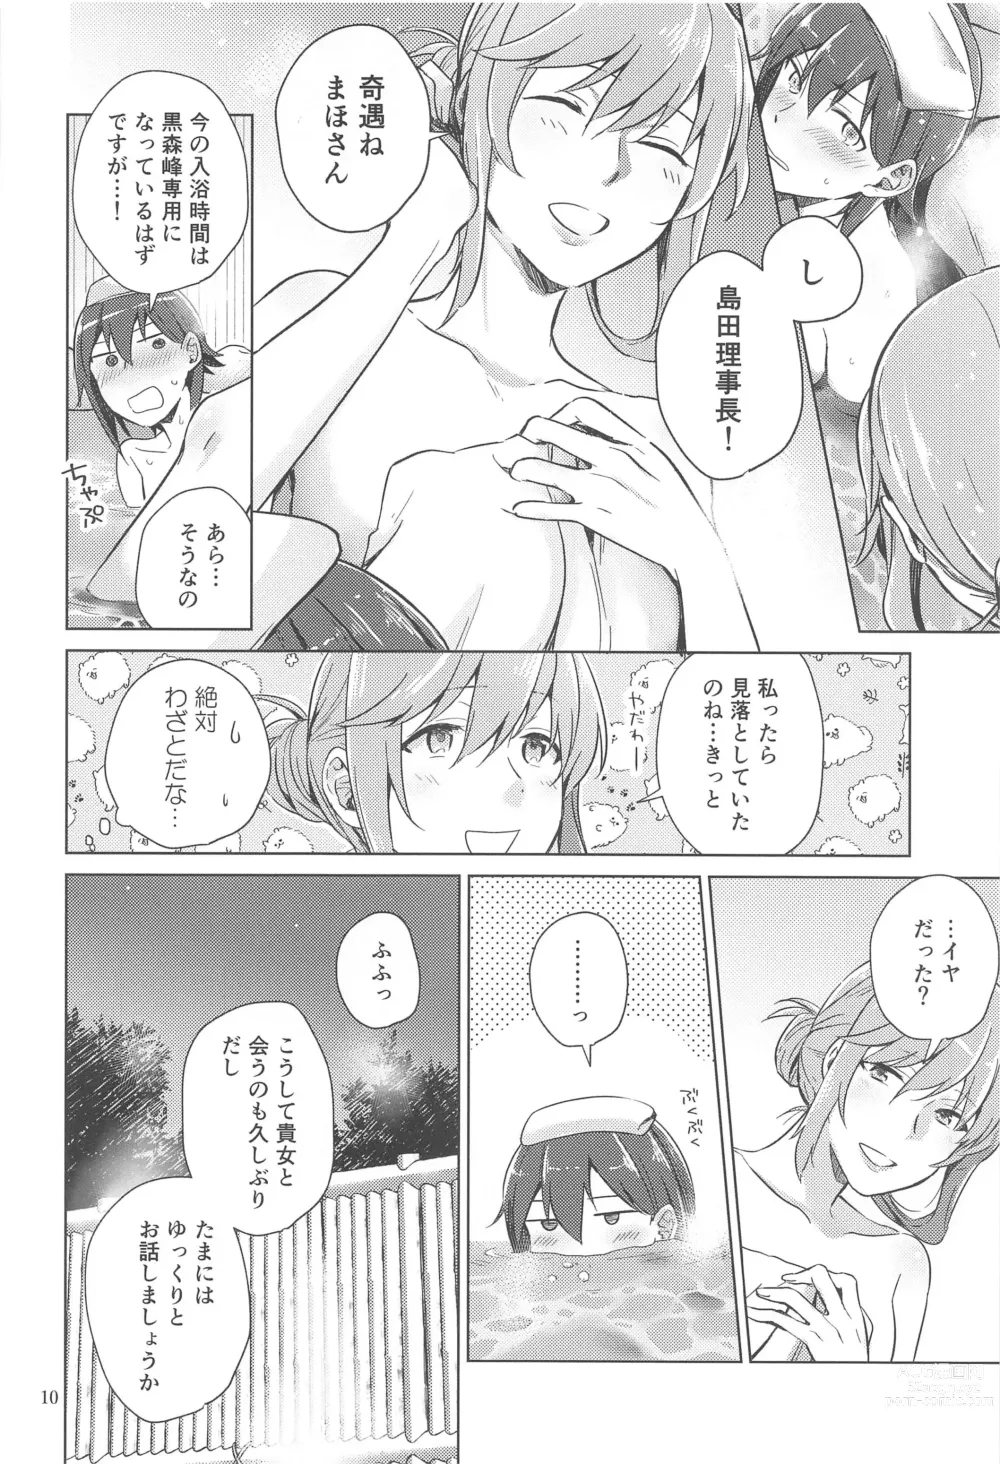 Page 9 of doujinshi Nishizumi to Shimada 2